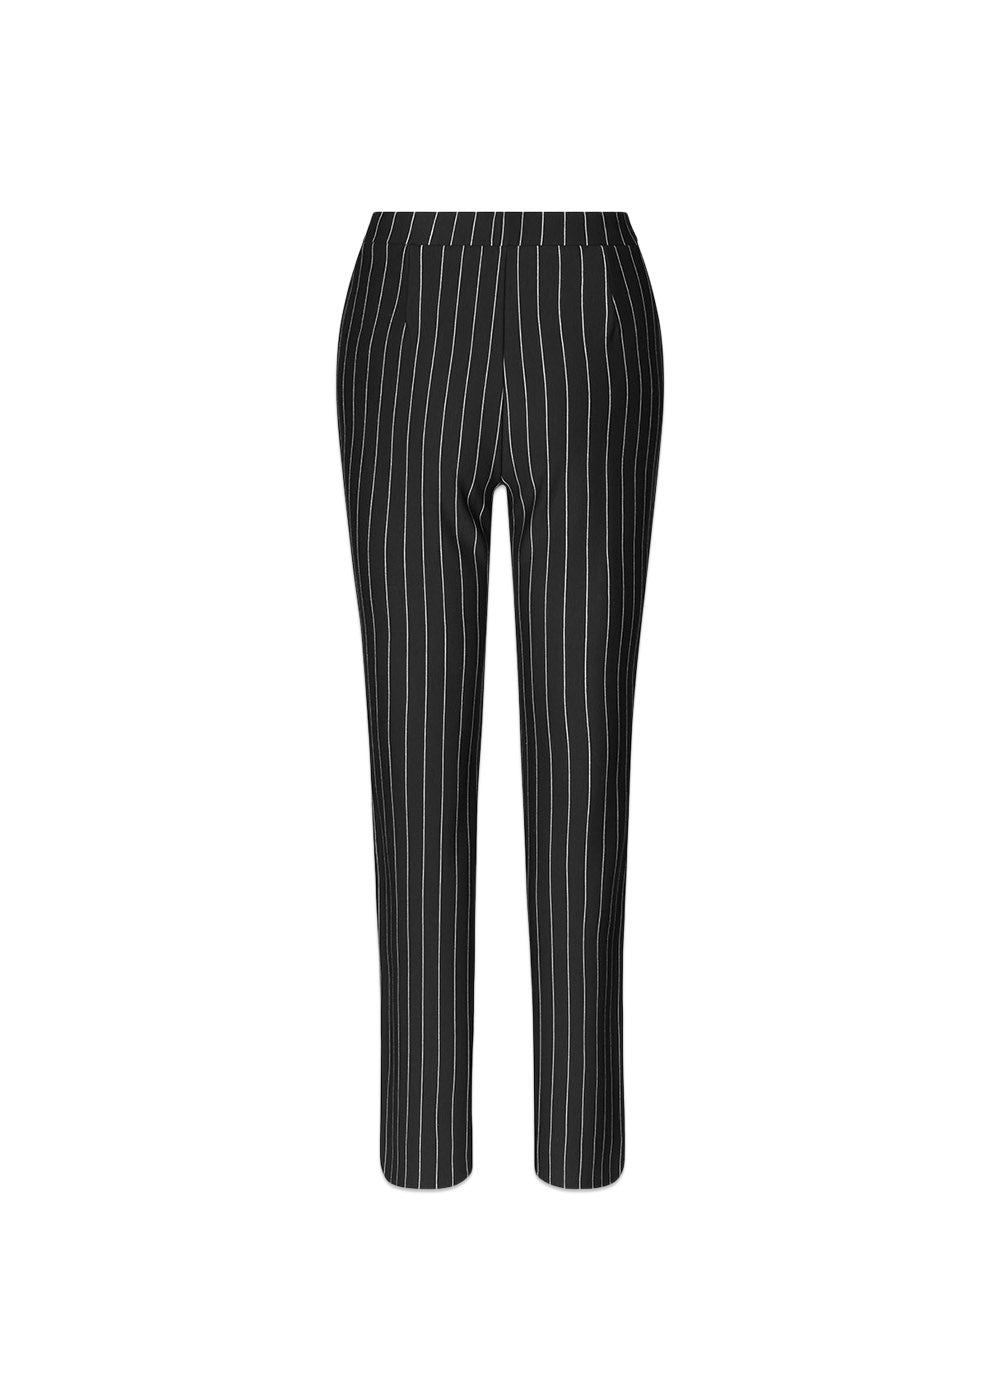 FadilMD pants - Black Pinstripe